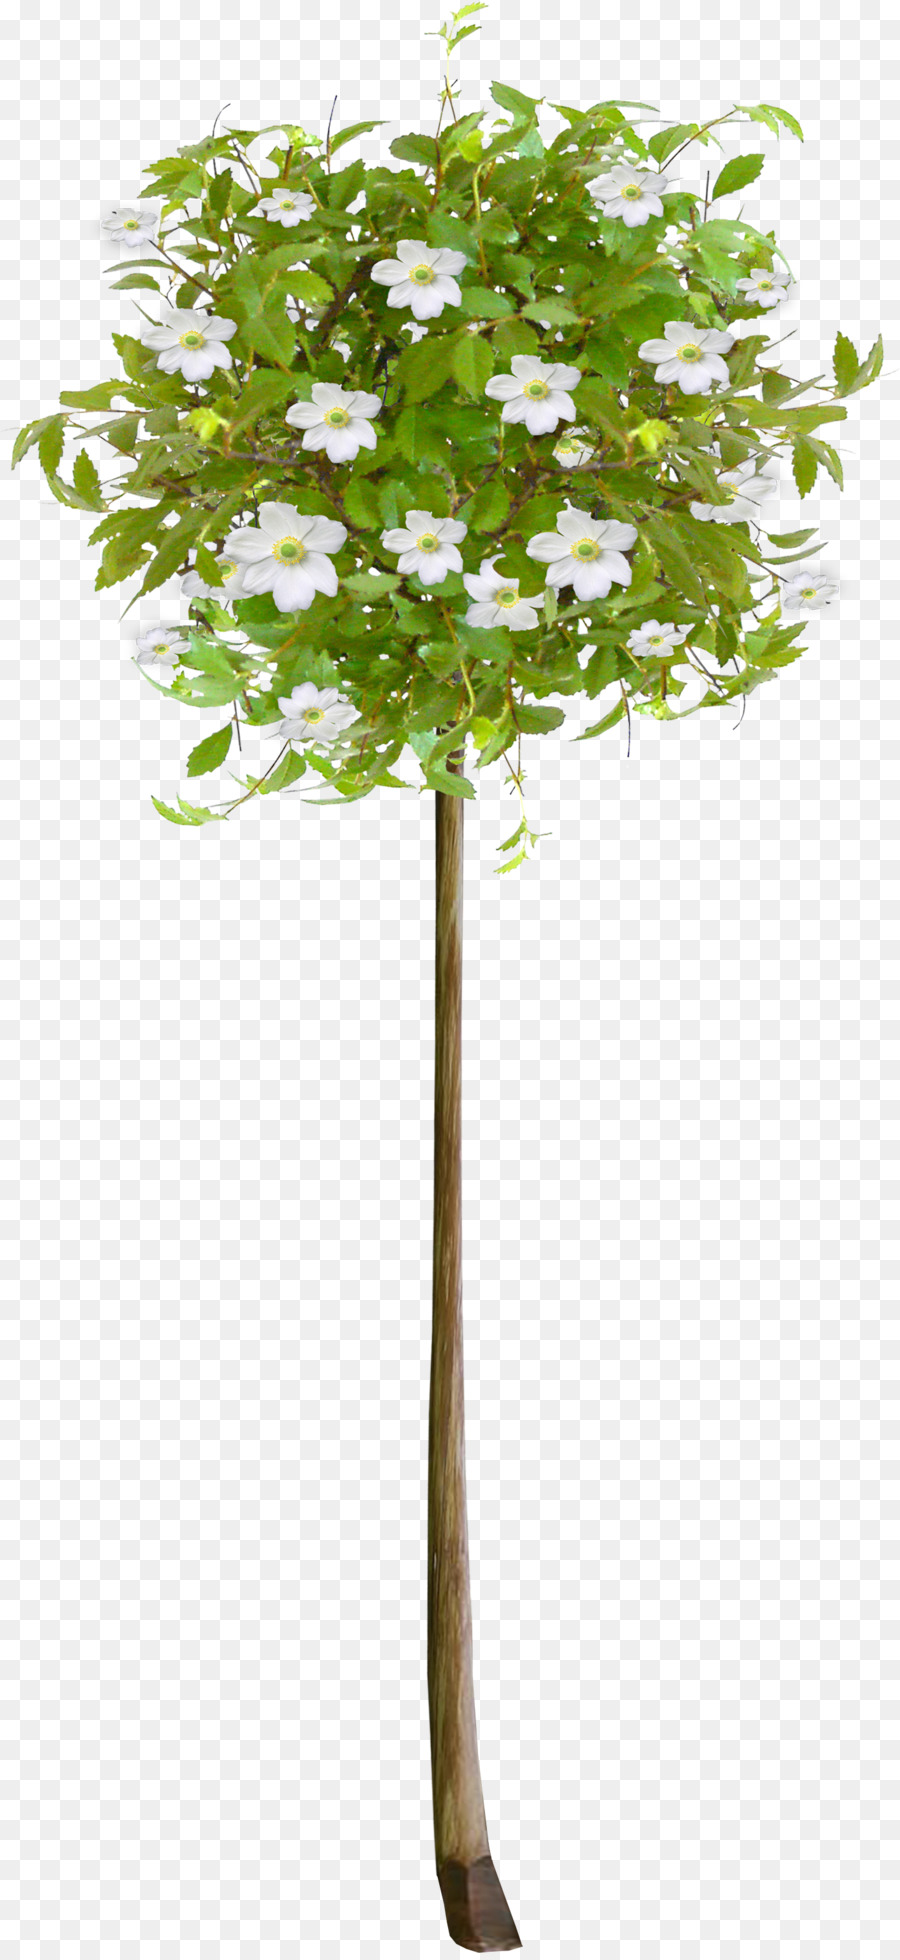 Tree Flower clipart - Tanne